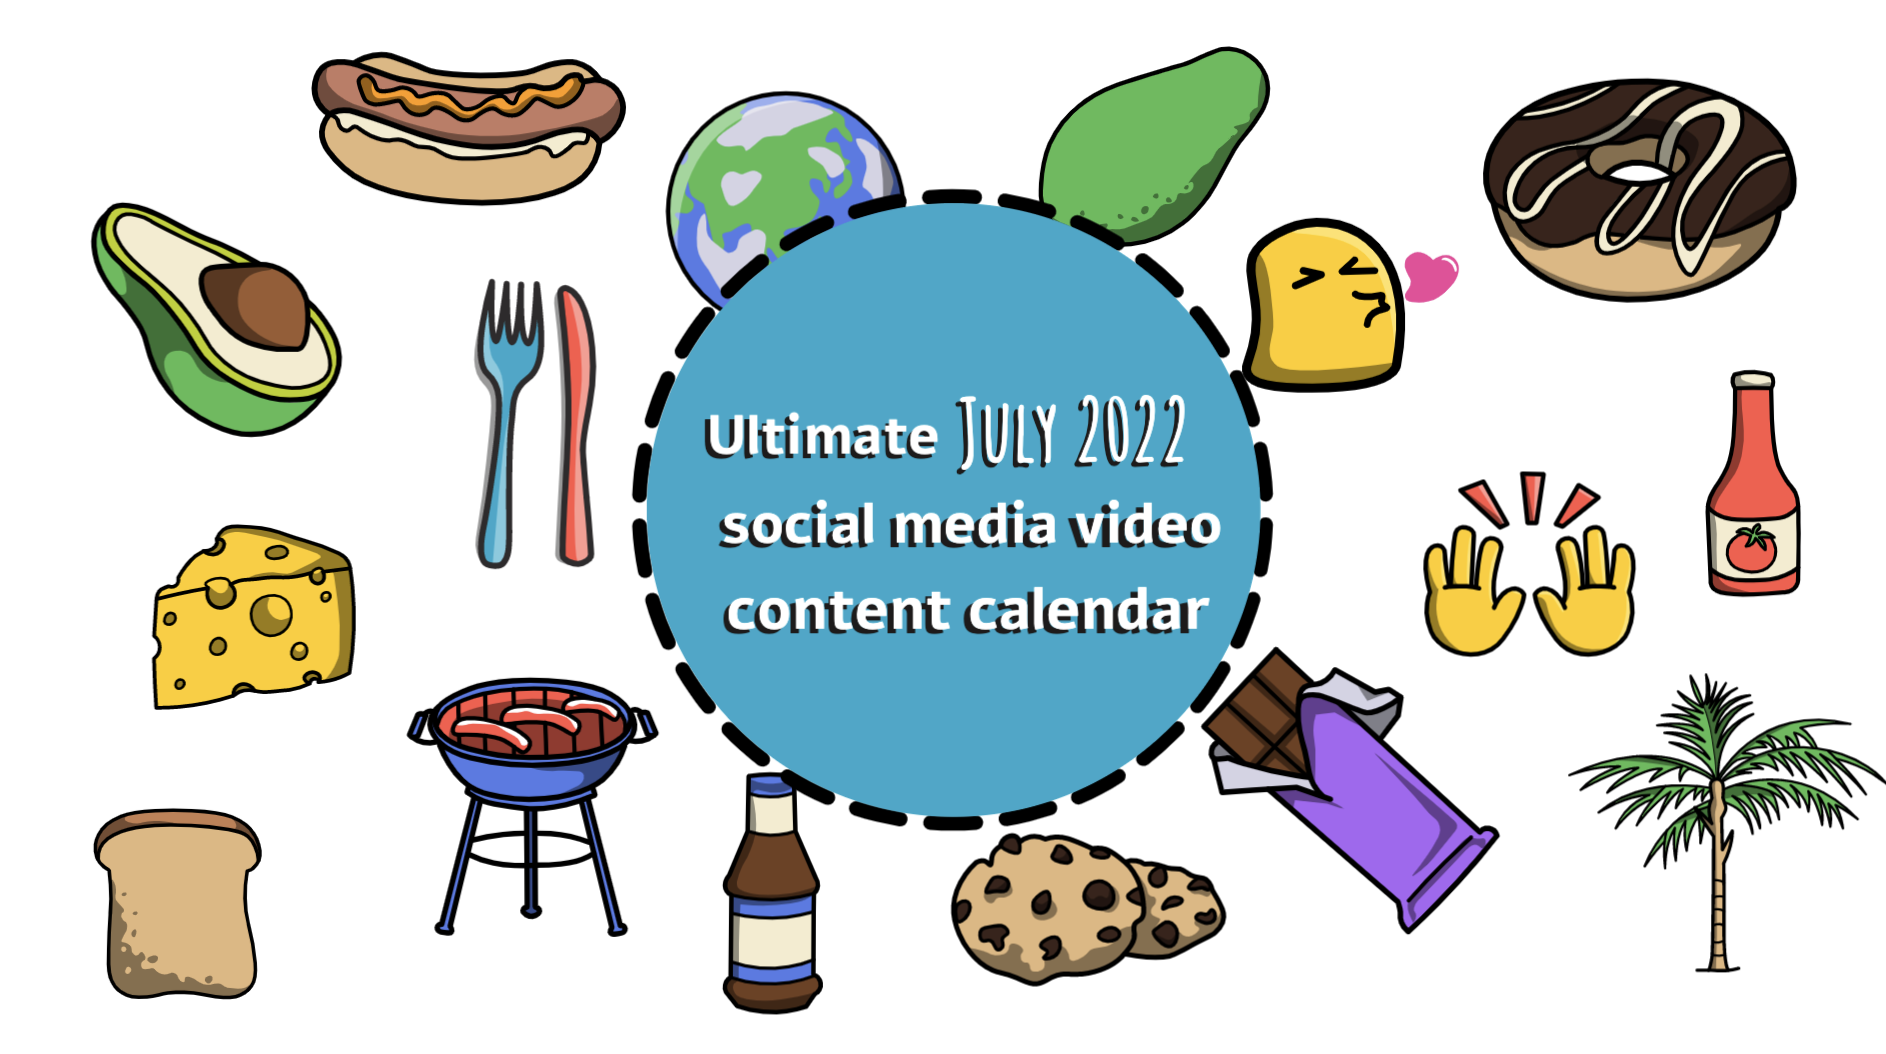 Ultimate July 2022 social media video content calendar